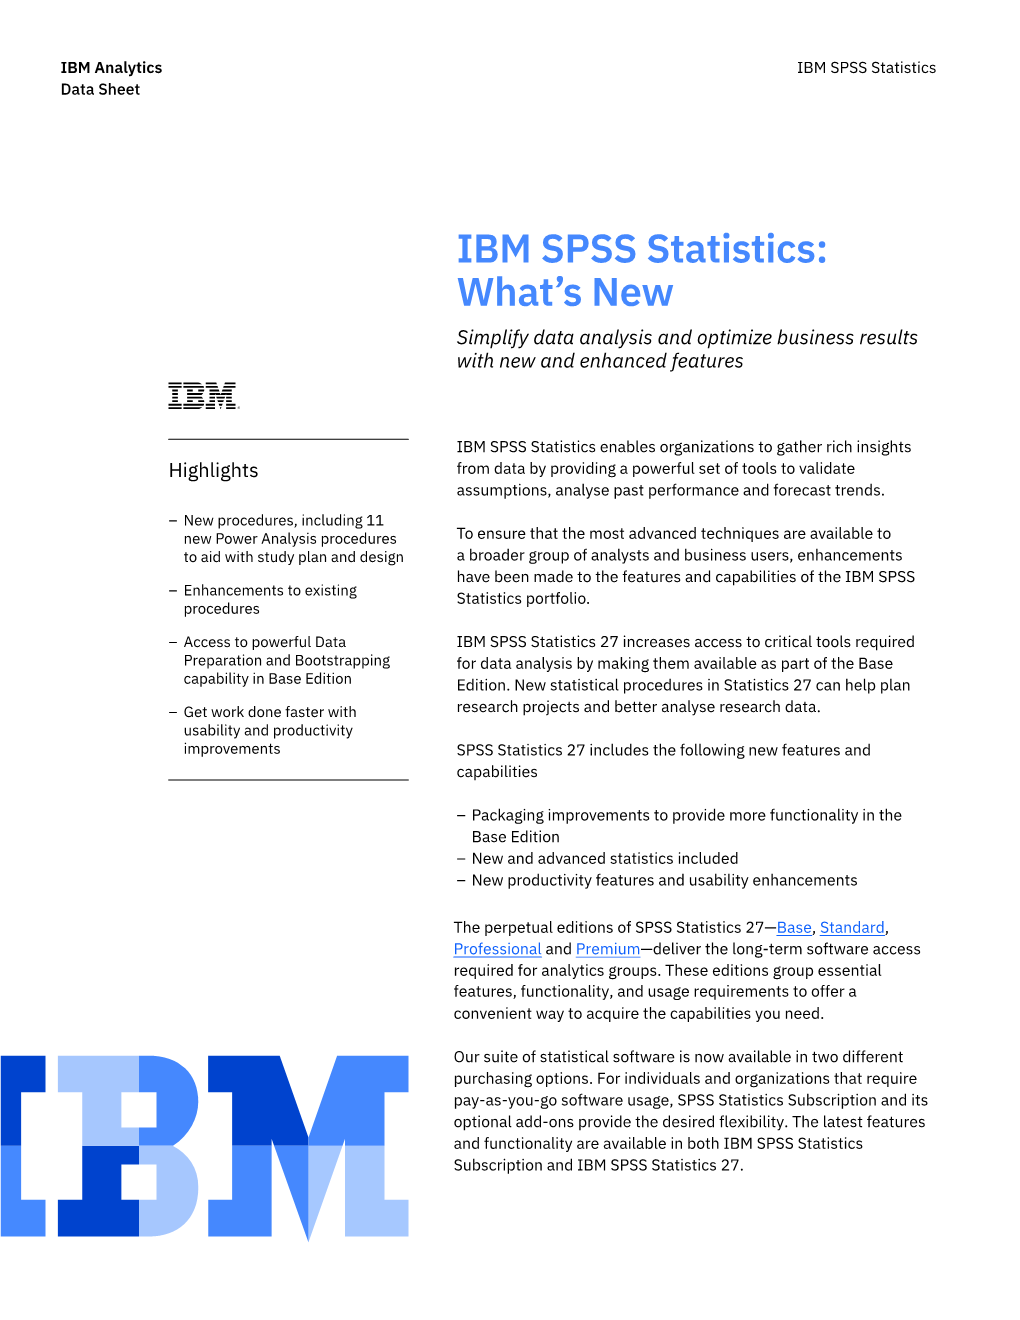 IBM SPSS Statistics: What's